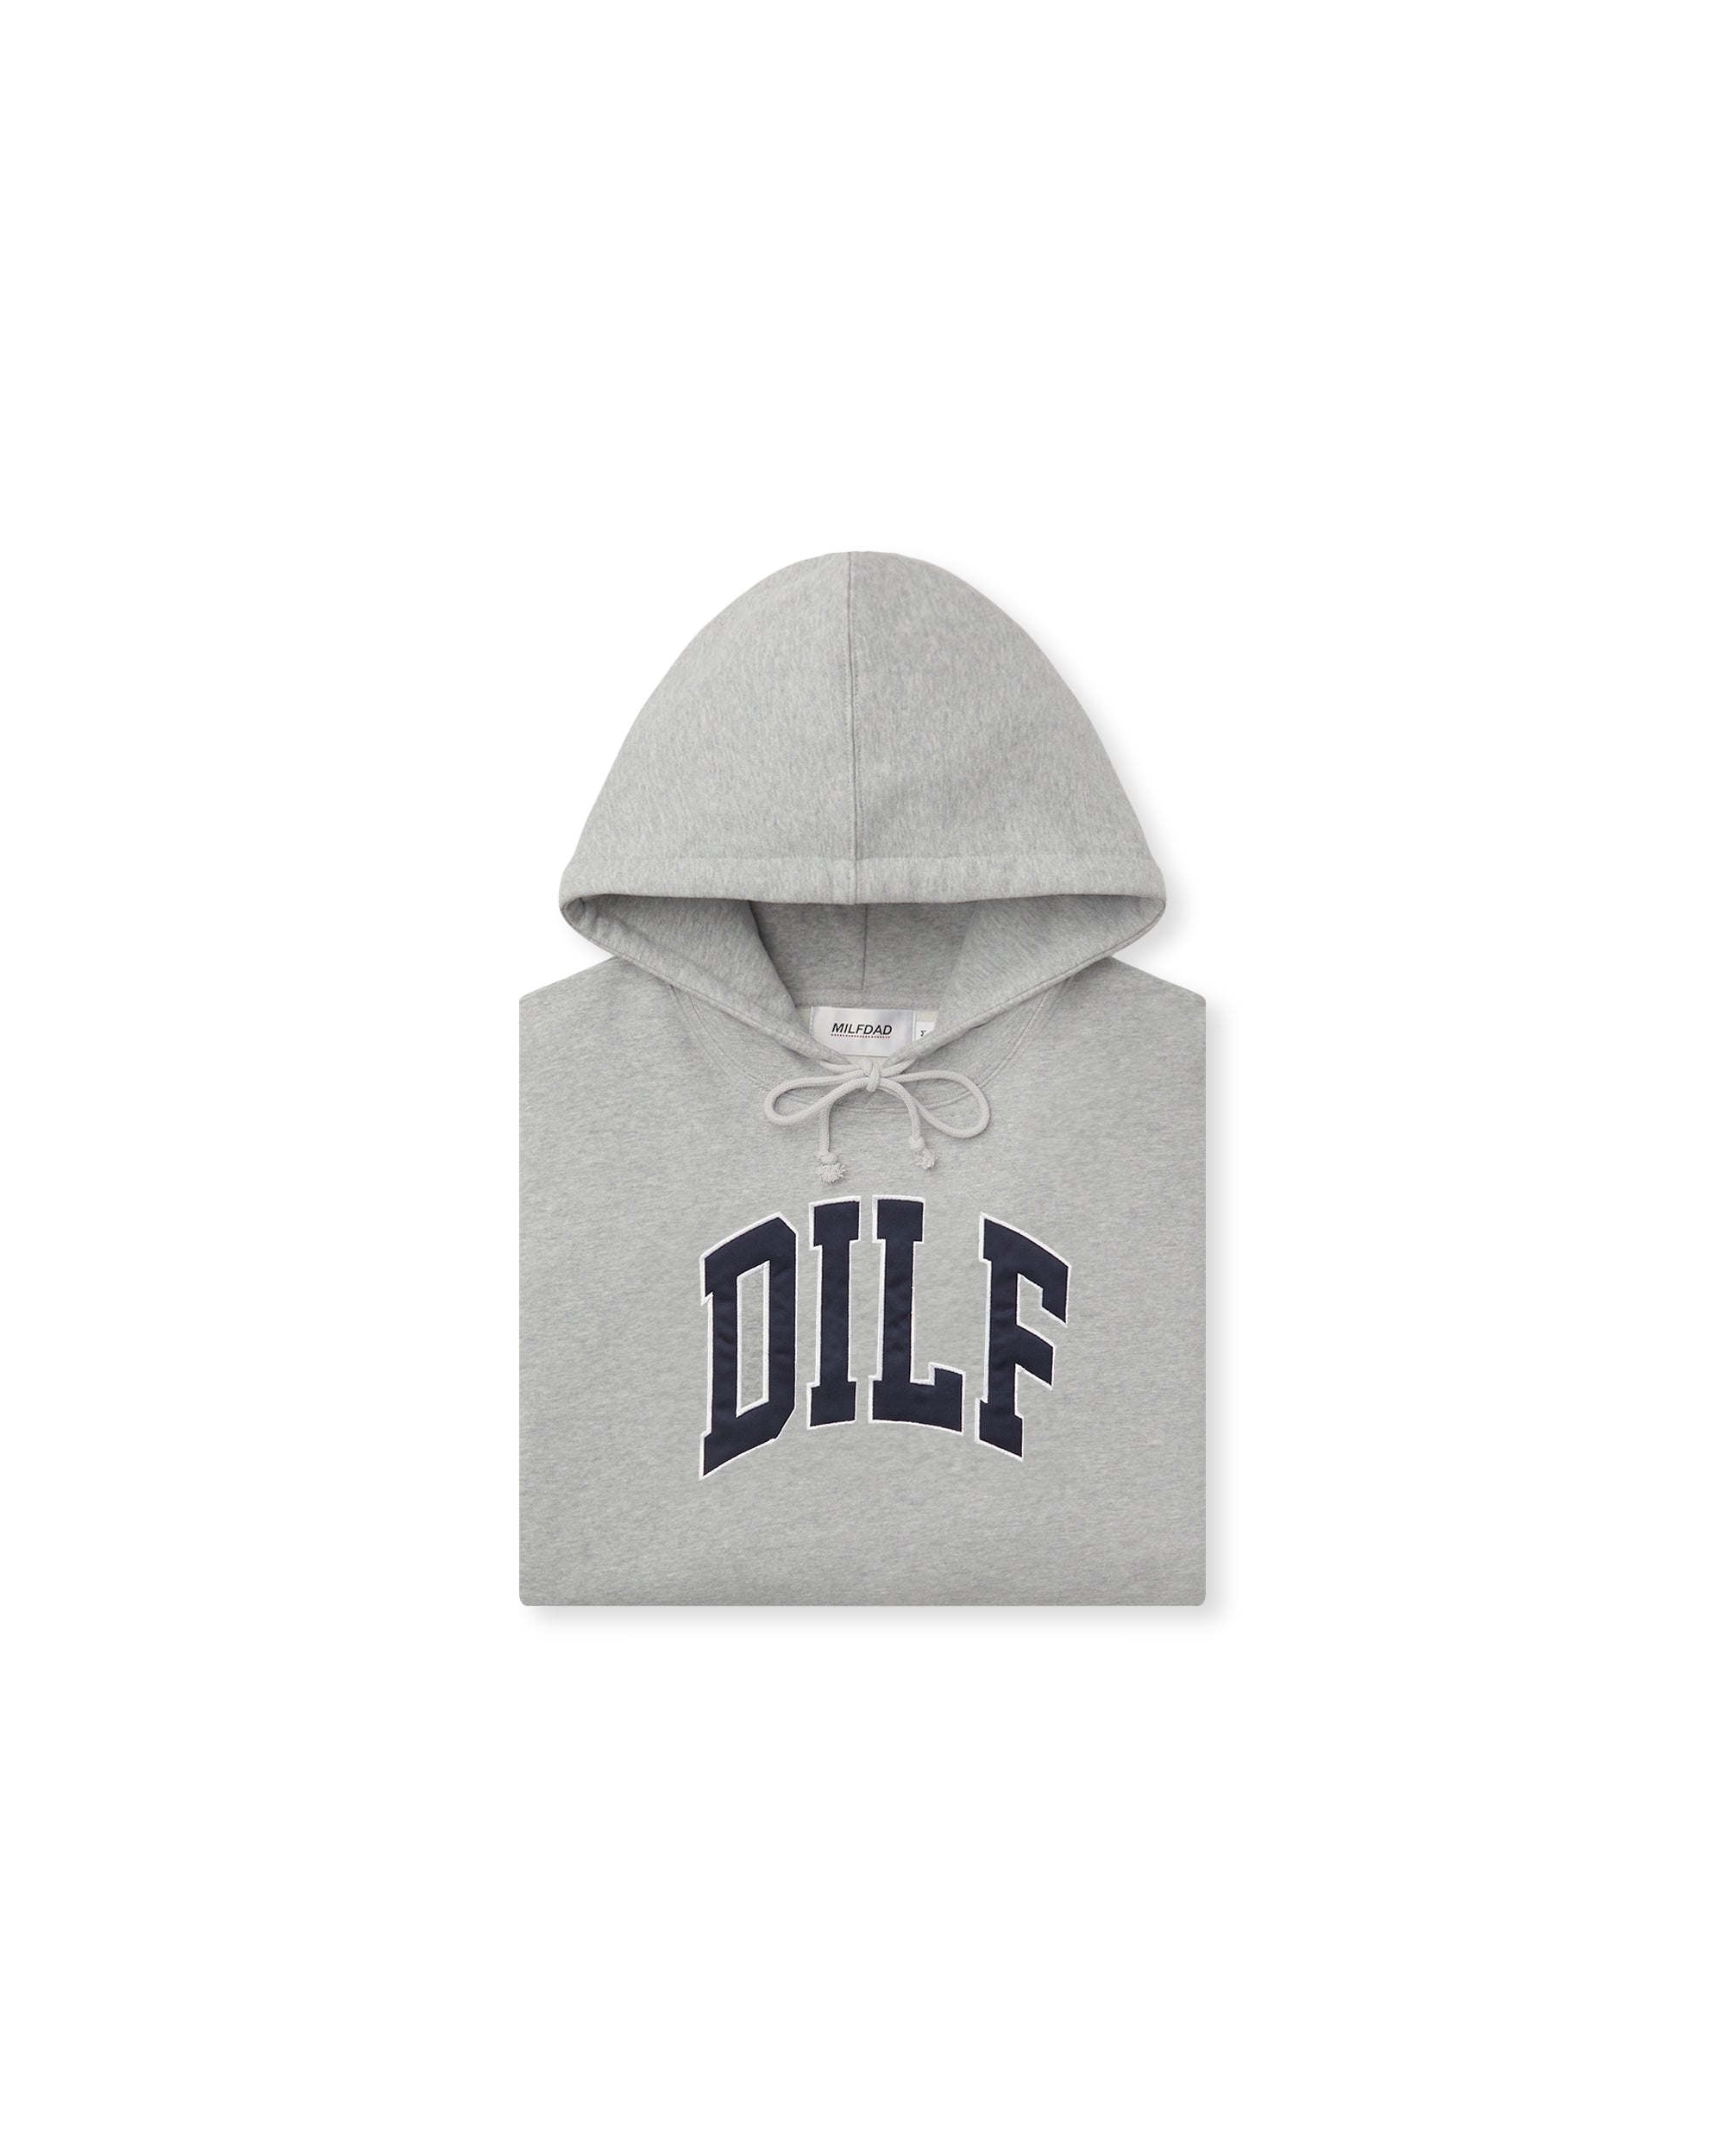 DILF Arc Logo Hoodie - Grey